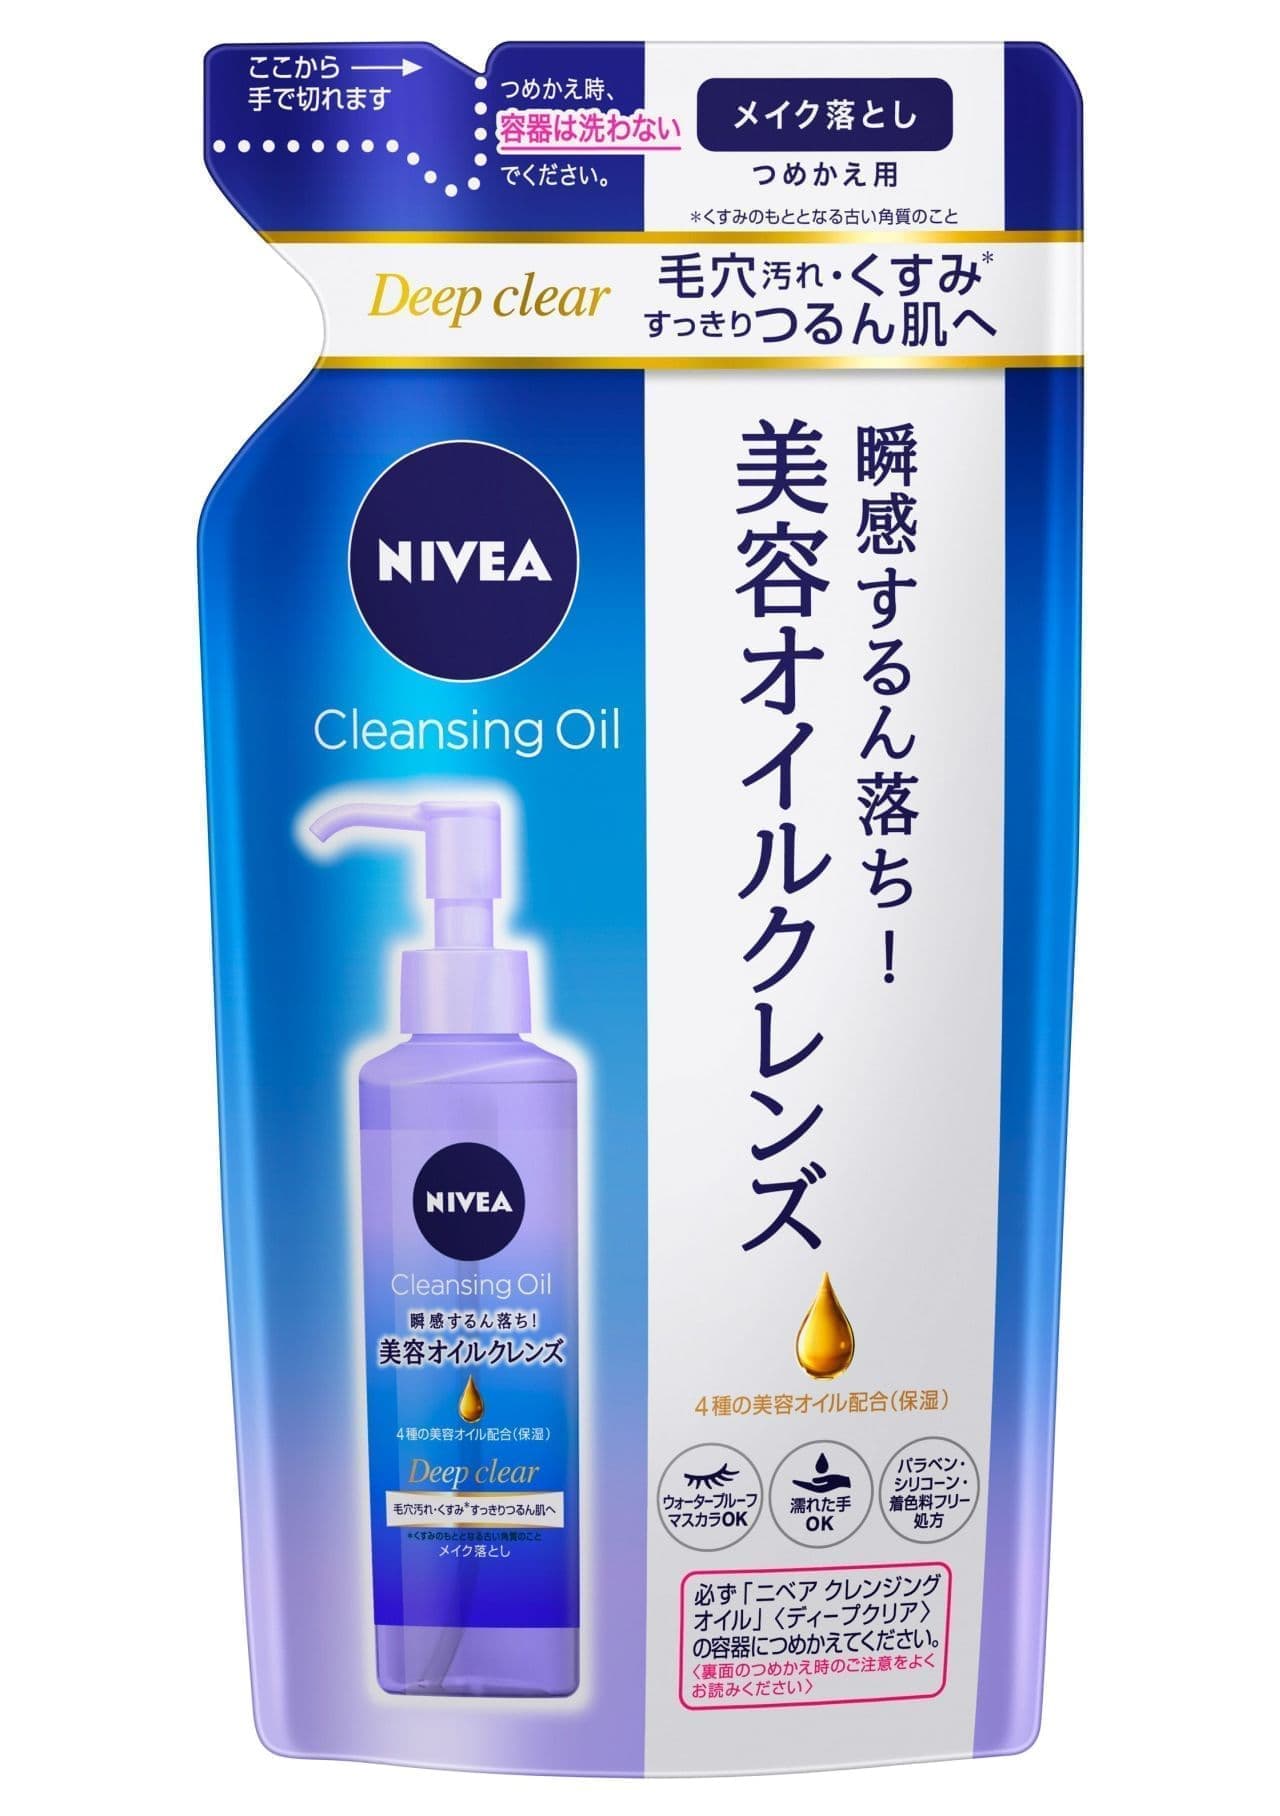 Nivea Beauty Oil Cleanse Deep Clear